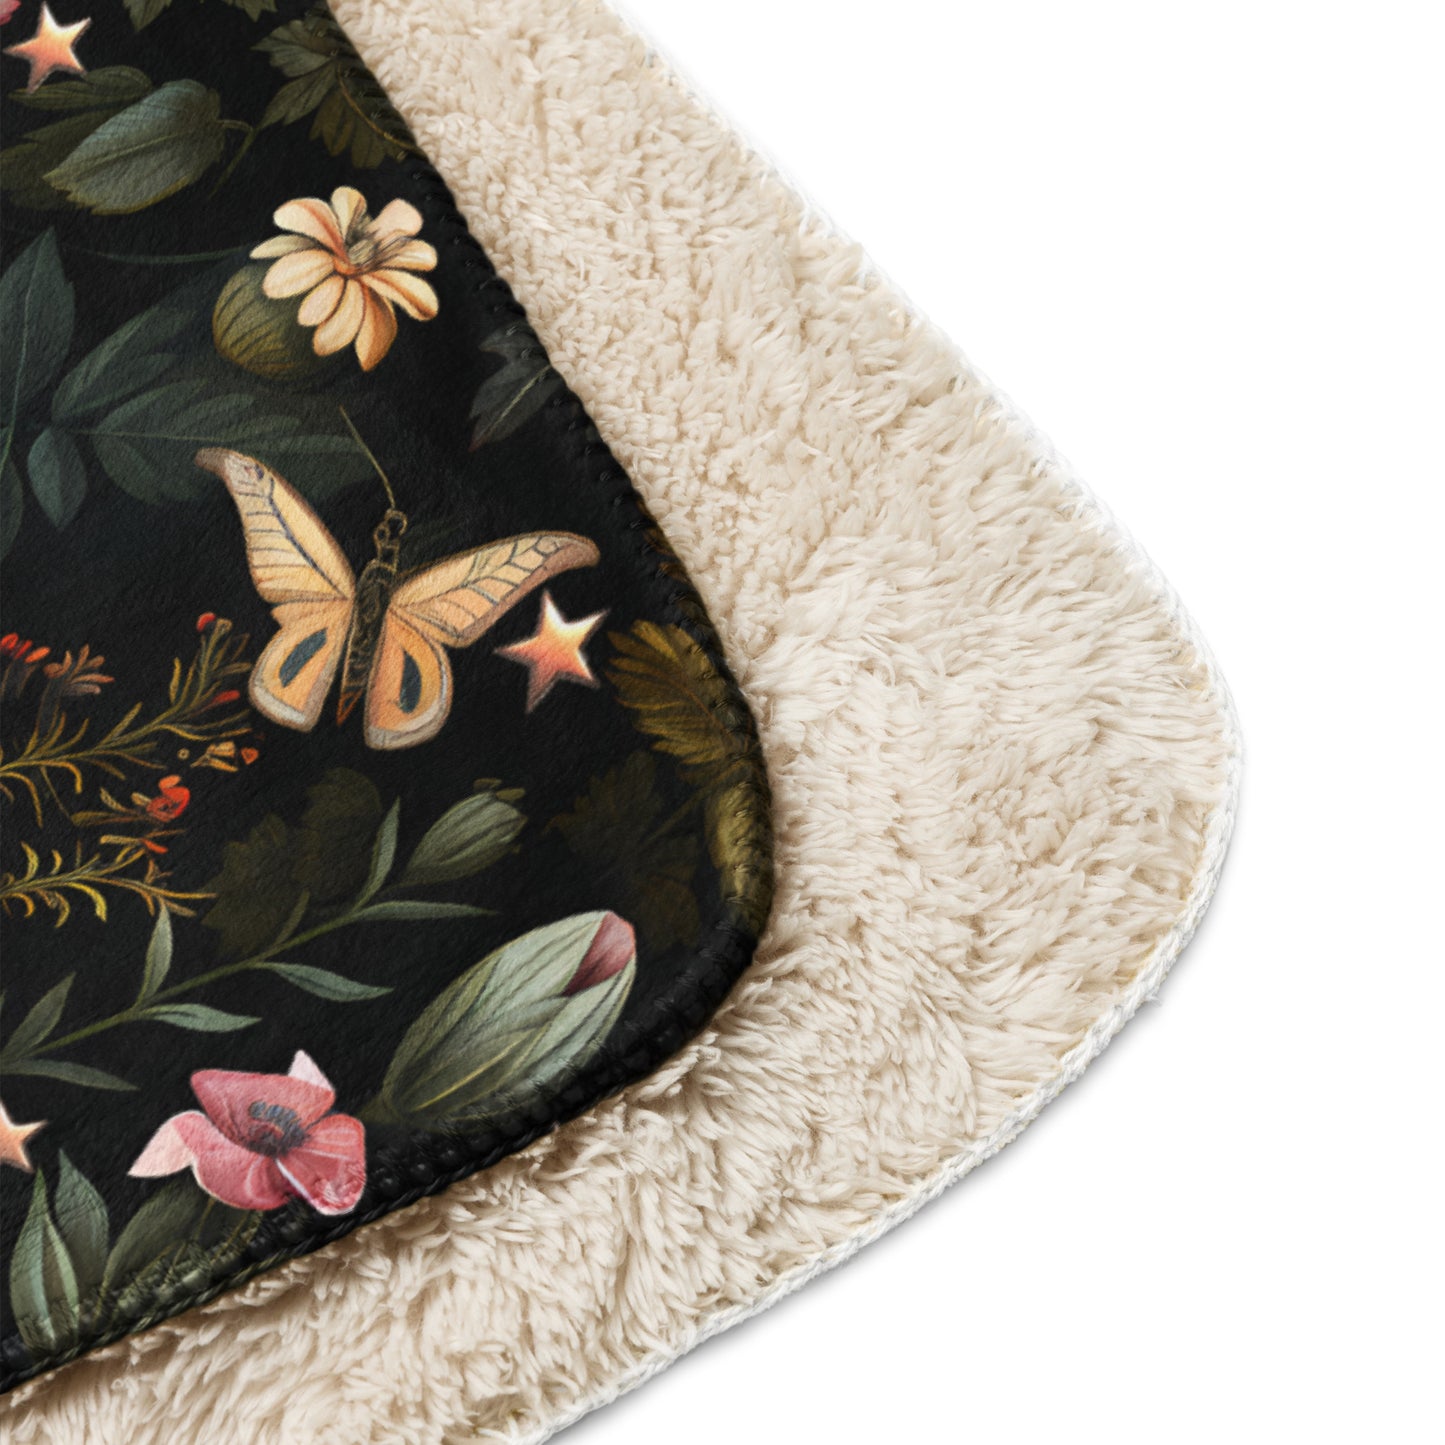 Moth Garden Sherpa Blanket